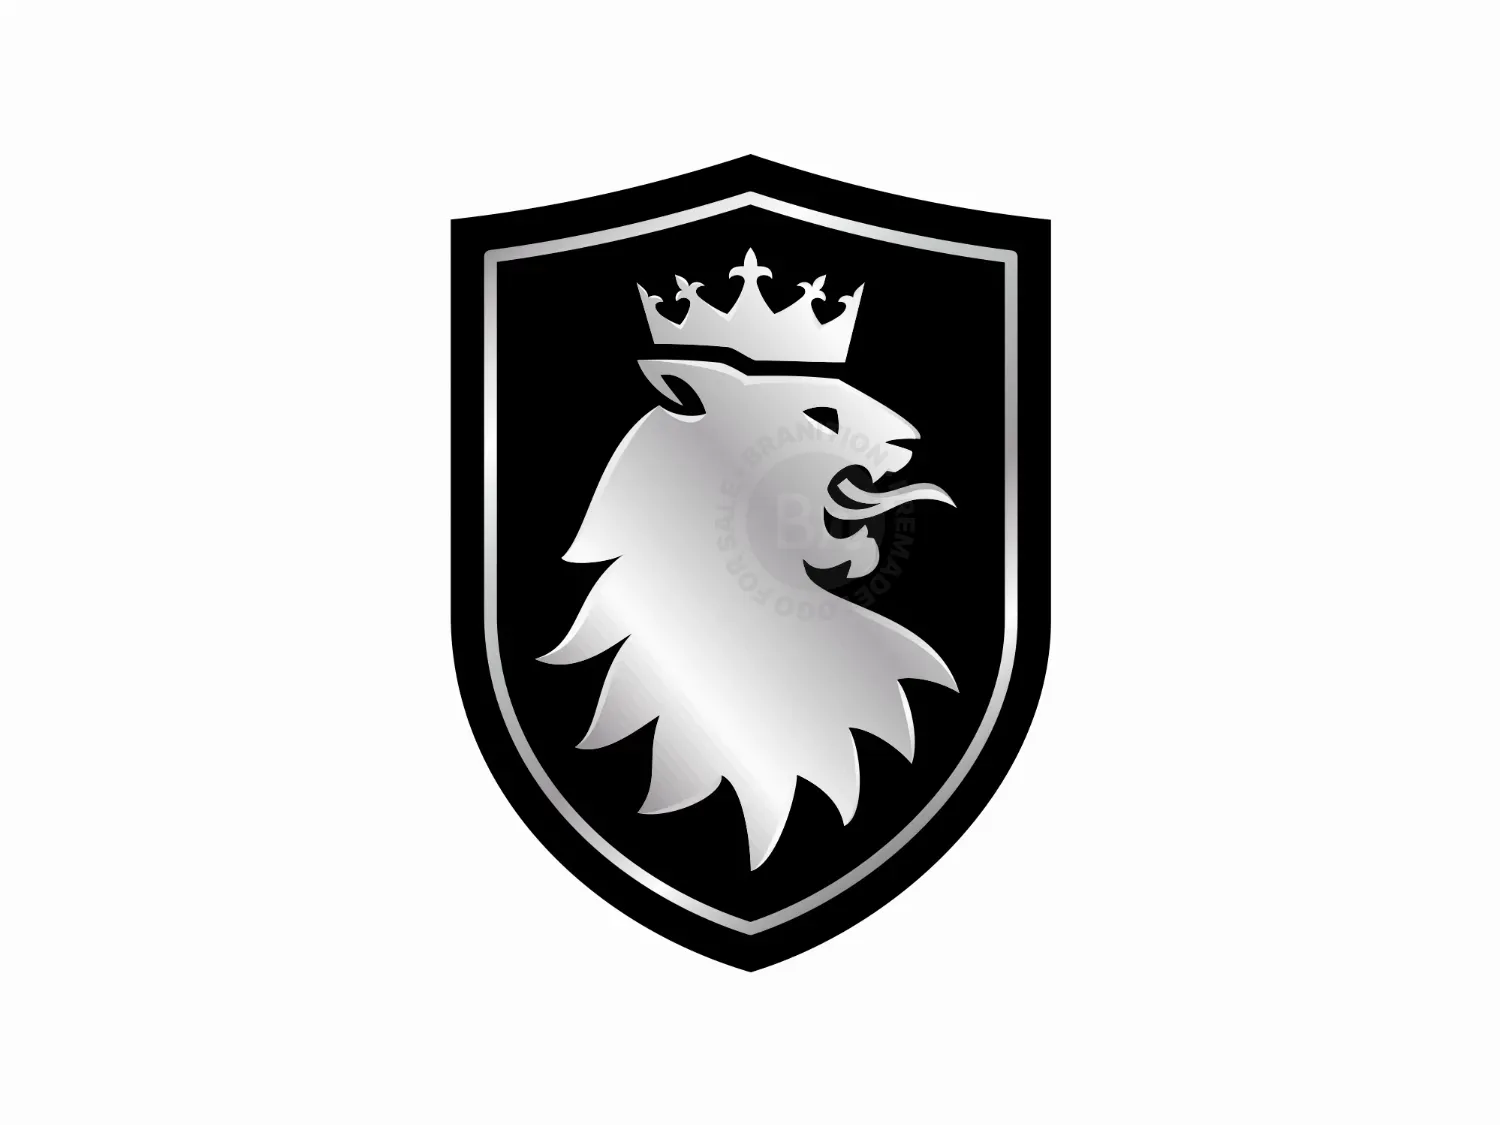 Luxury Lion crest heraldry logo. Elegant gold heraldic shield icon. Premium  brand identity emblem. Royal coat of arms company label symbol. Modern  vector illustration. 17485108 Vector Art at Vecteezy